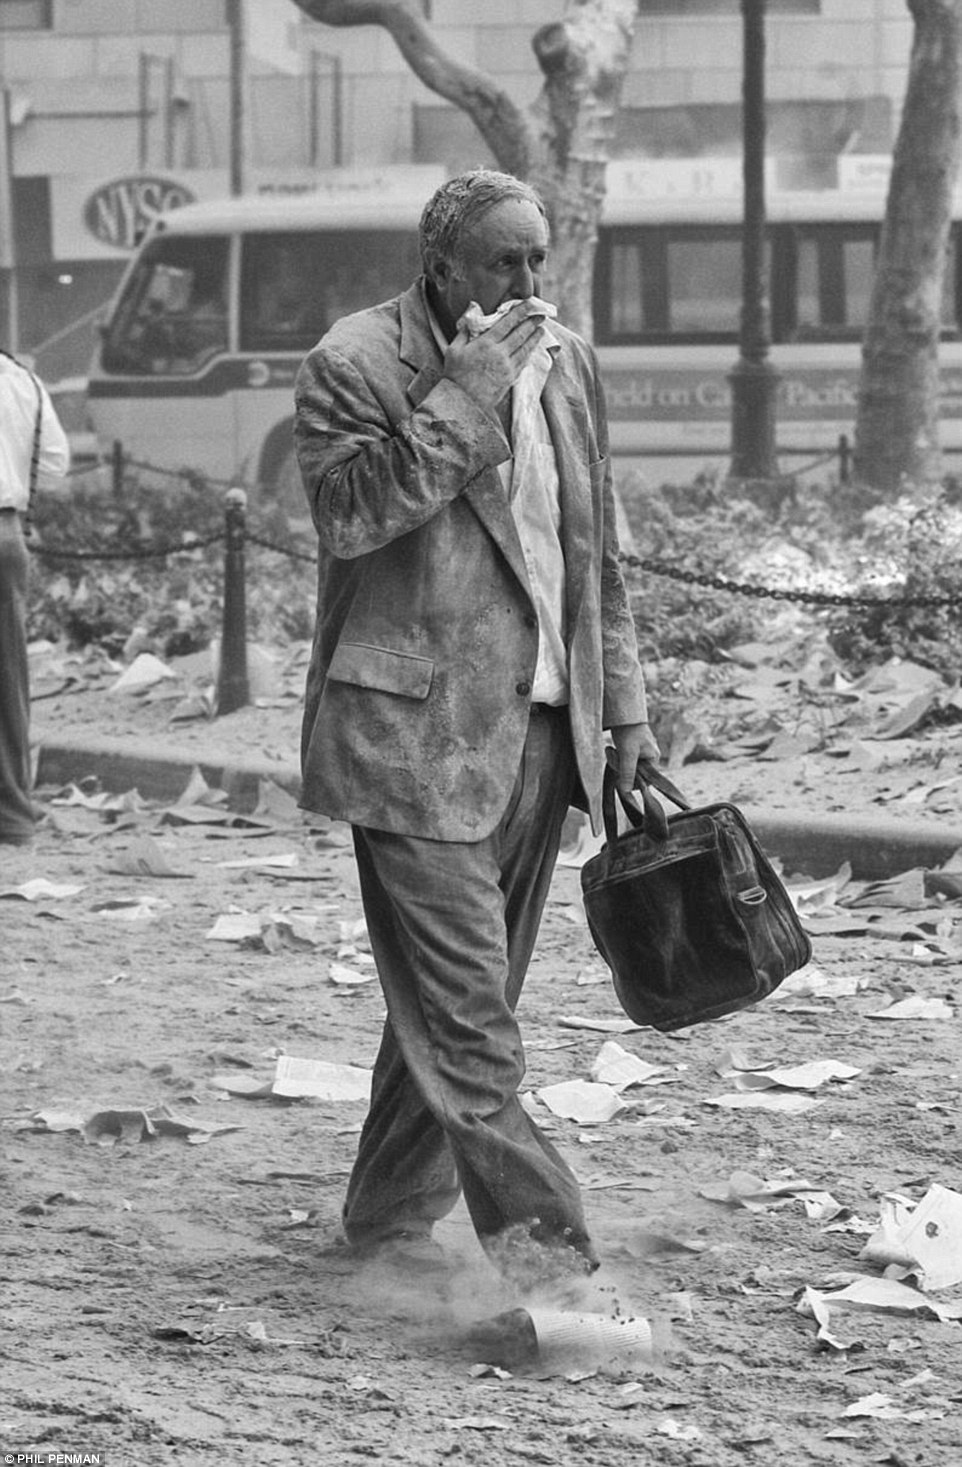 Снимки британца Фила Пенмана, который оказался на месте теракта 9/11